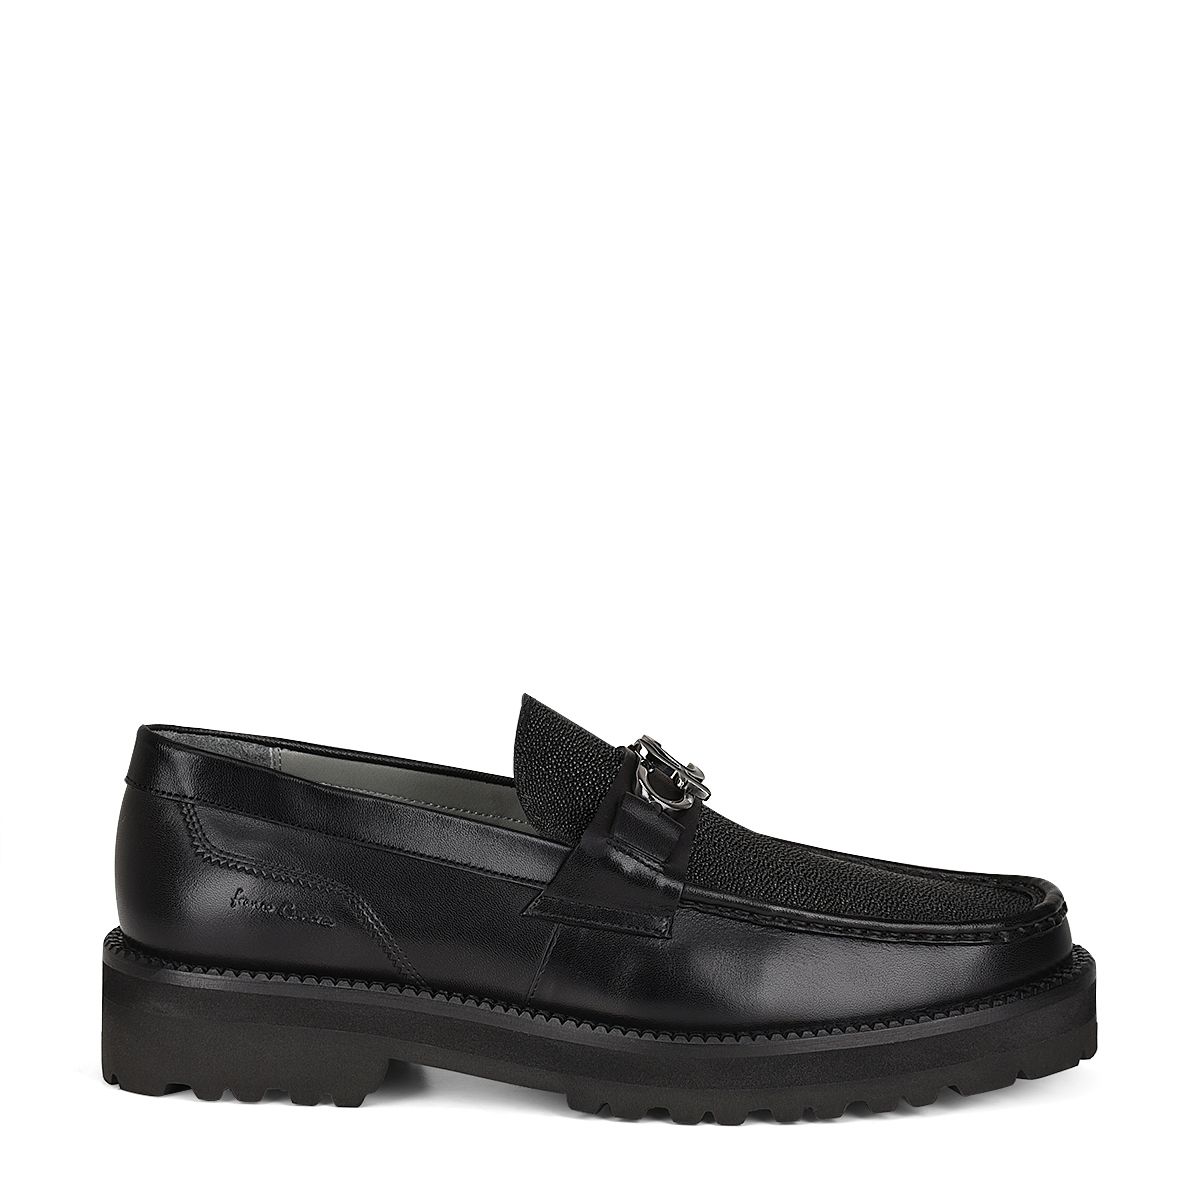 2D7MTTS - Cuadra black casual stingray leather platform bit moccasins for men-Franco Cuadra-Kuet-Cuadra-Boots